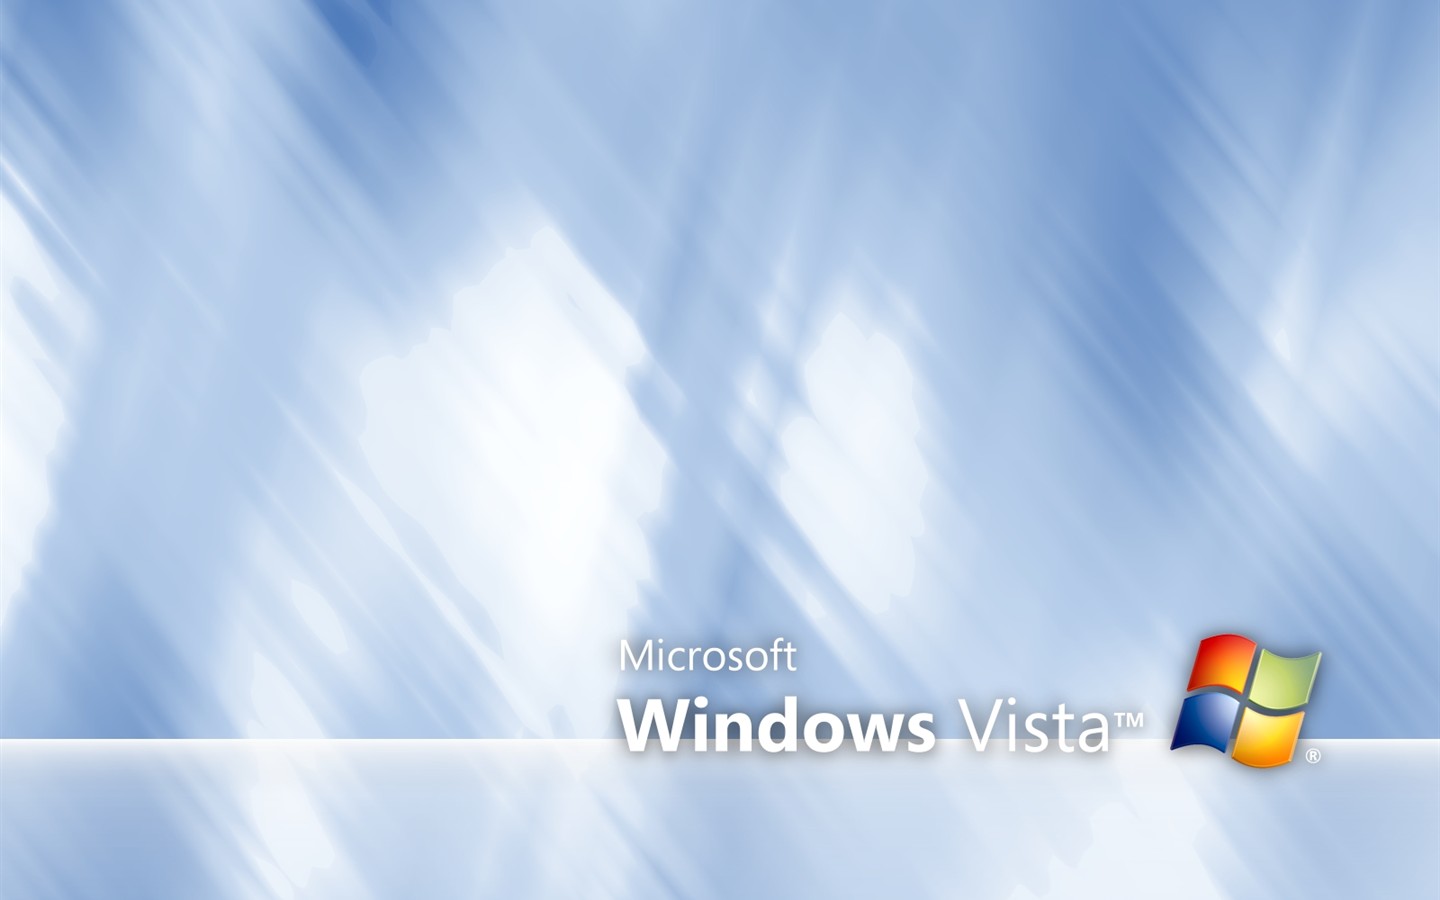  Vistaの壁紙アルバム #19 - 1440x900